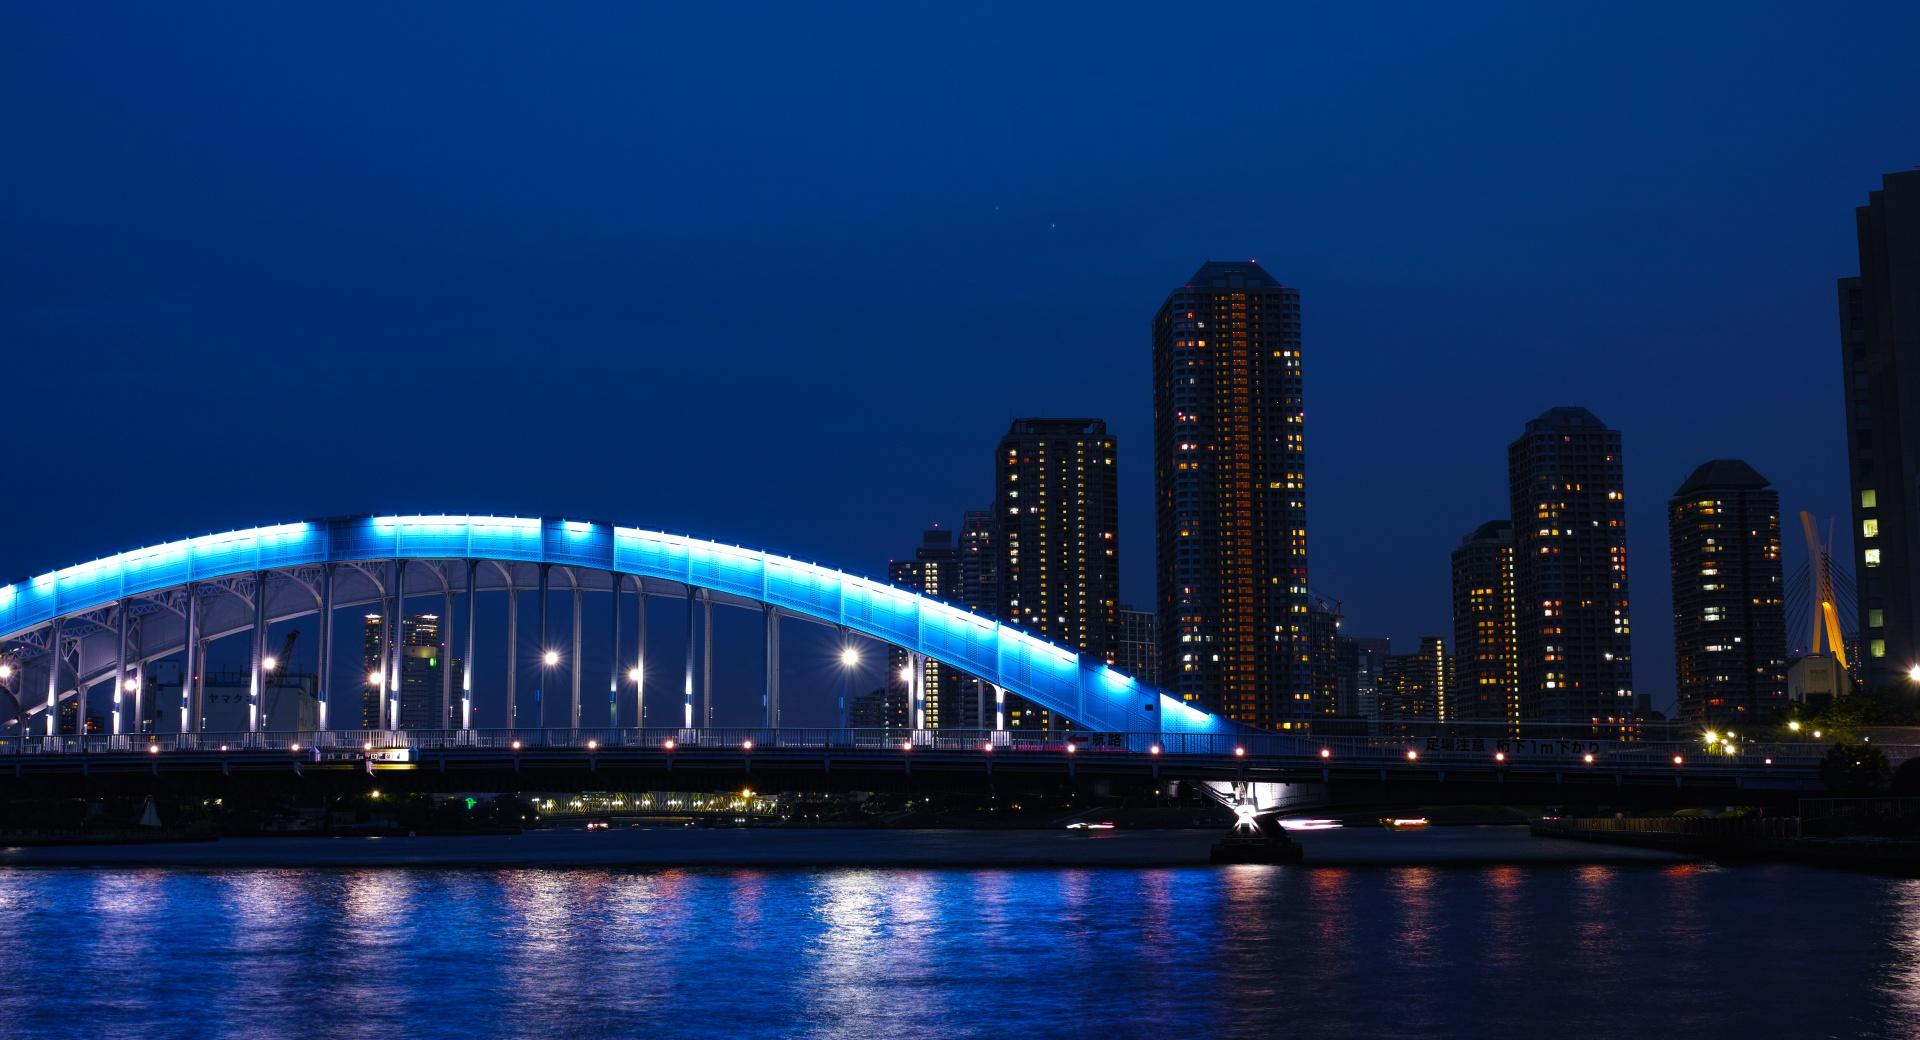 Eitai Bashi Bridge, Japan at 1024 x 1024 iPad size wallpapers HD quality